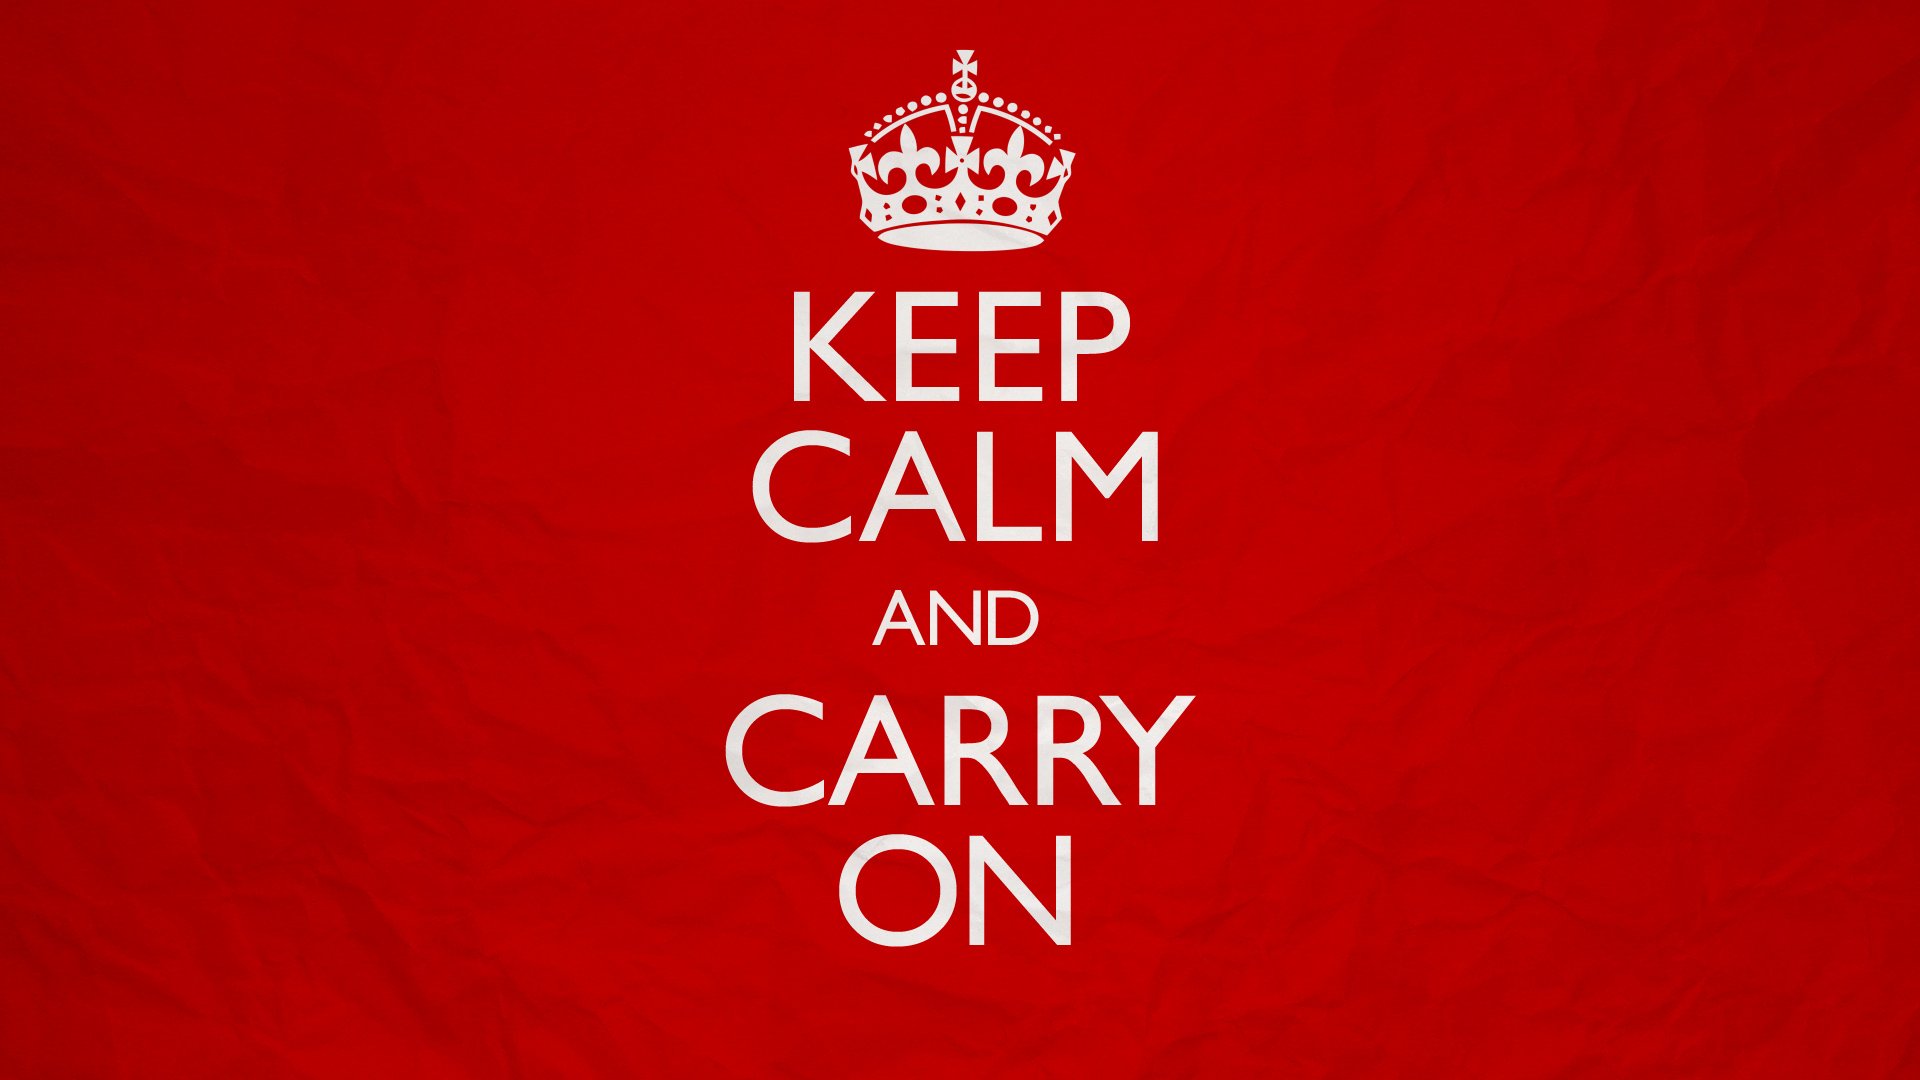 Keep calm на русский. Keep Calm and carry on. Keep Calm and carry on плакат. Сохраняйте спокойствие. Постер keep Calm.